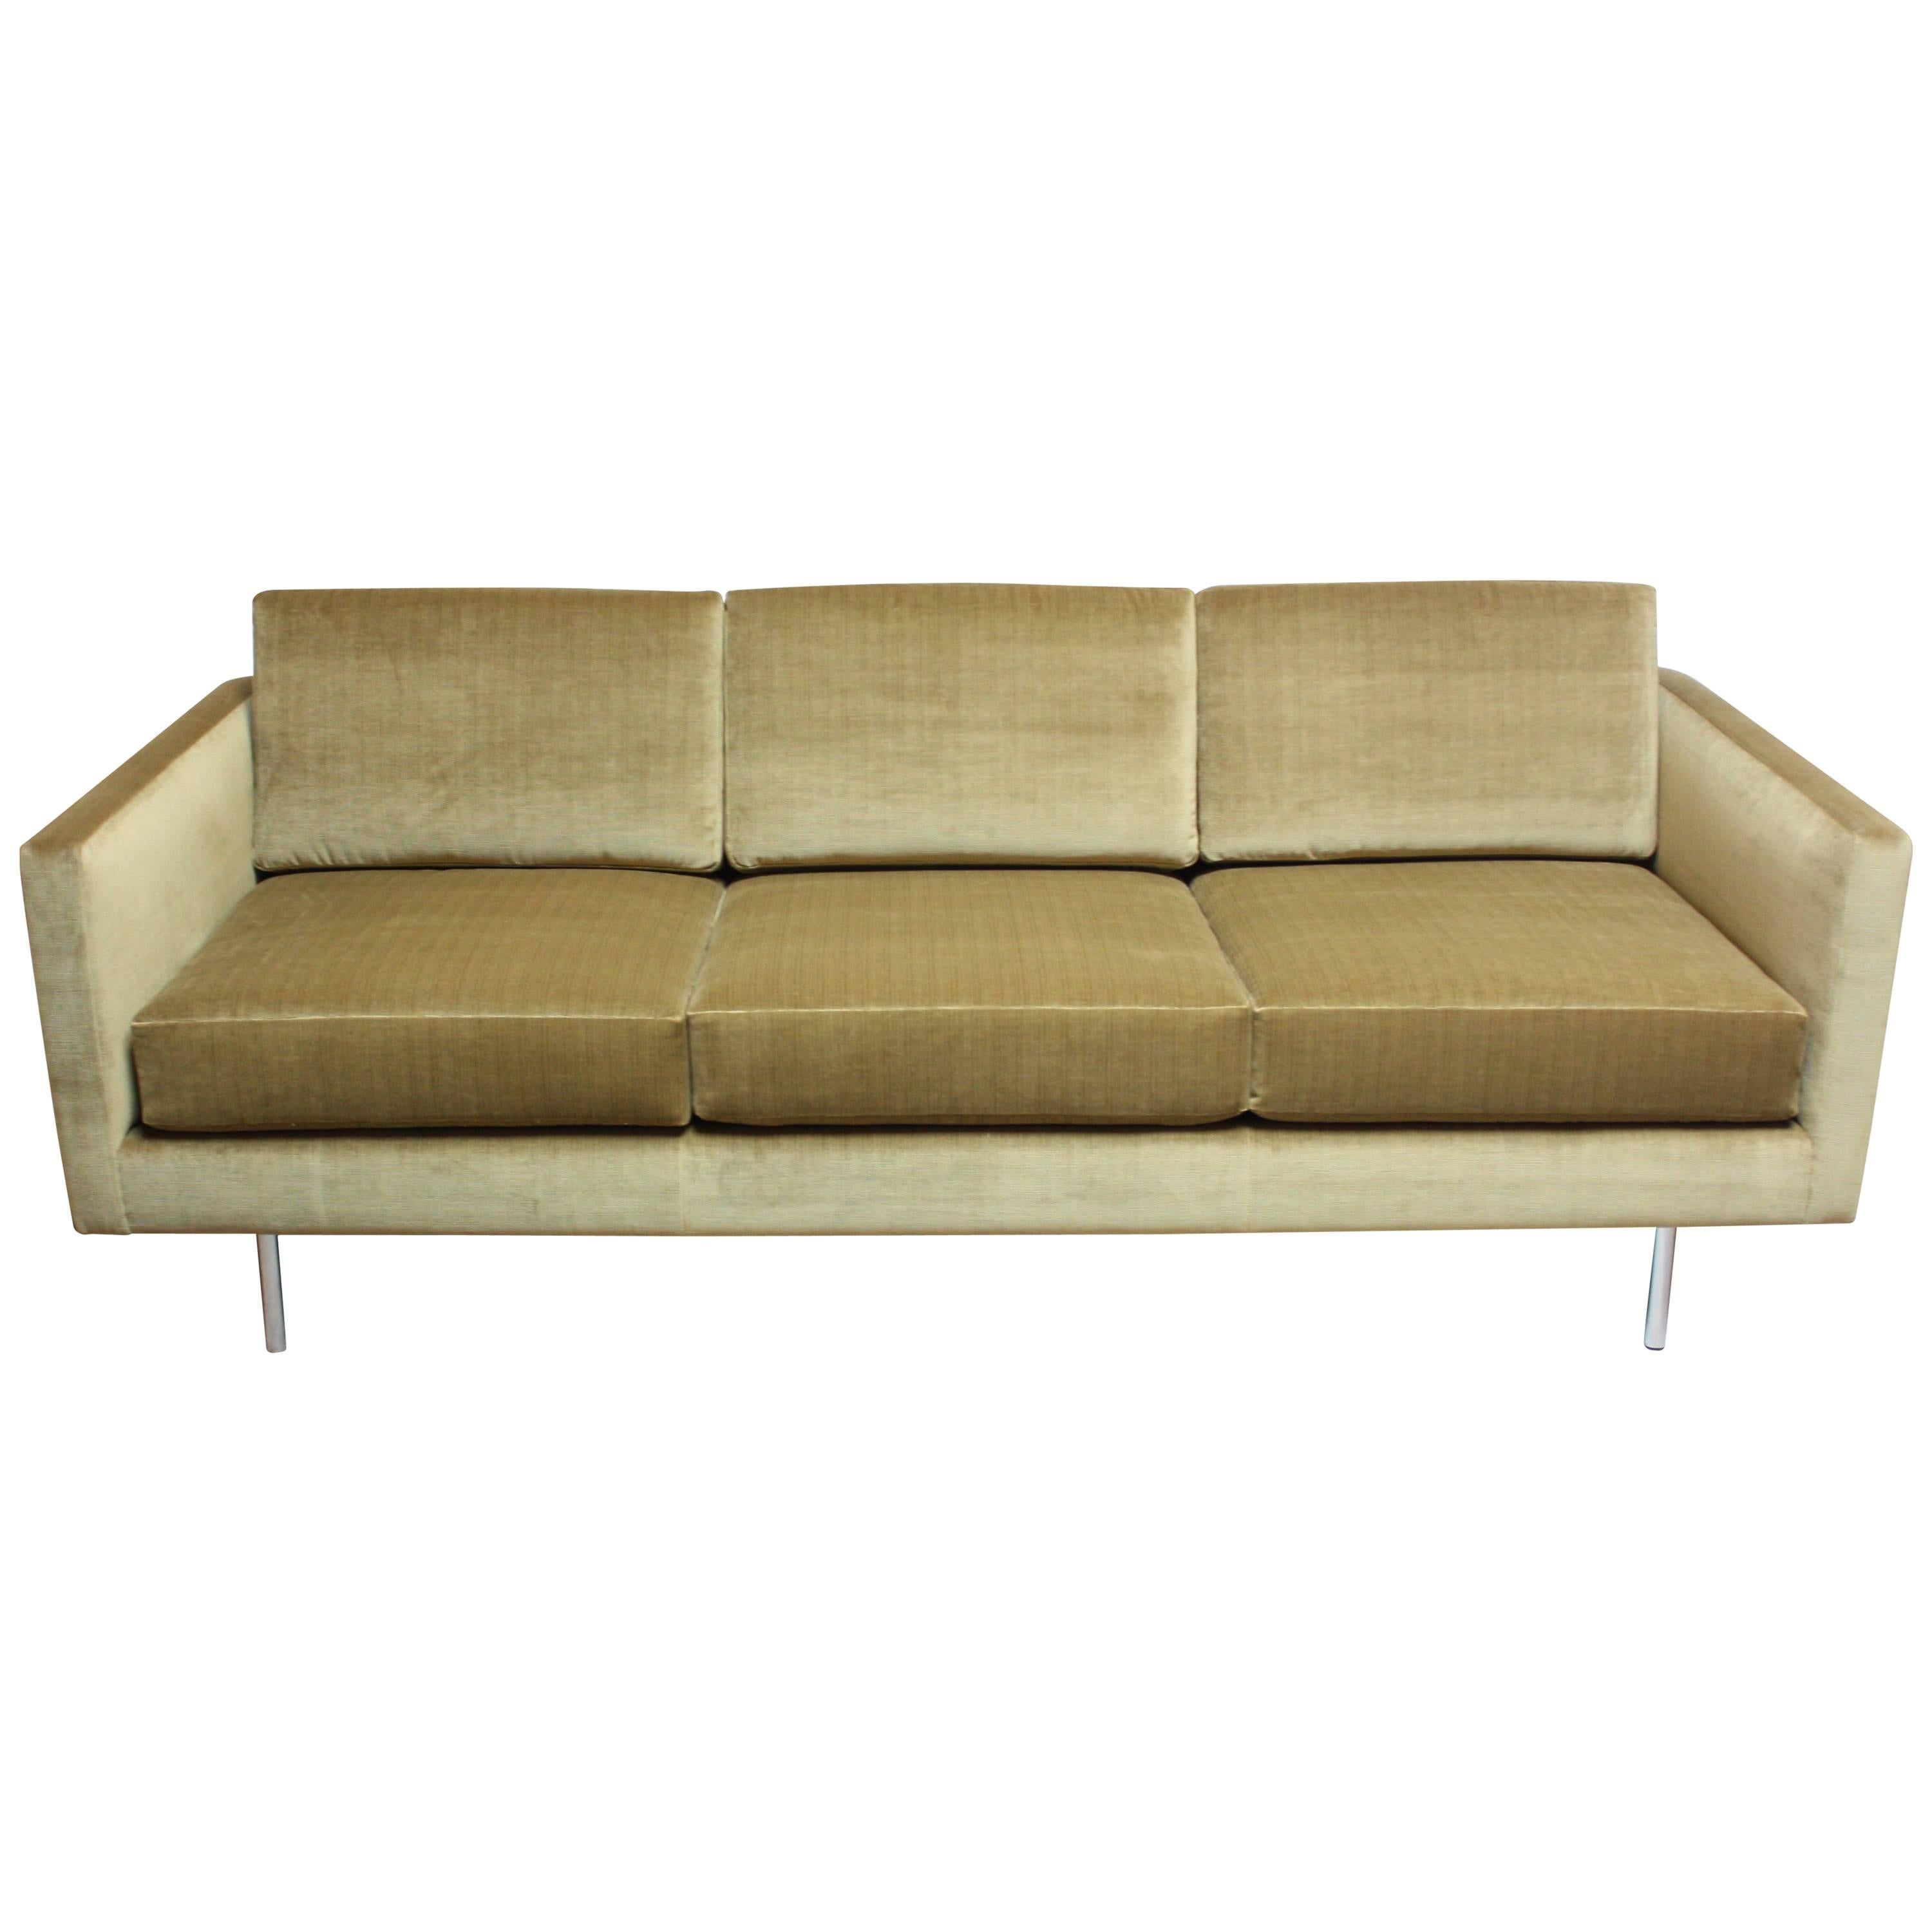 1960s Three-Seat Directional Sofa in Sage Velvet